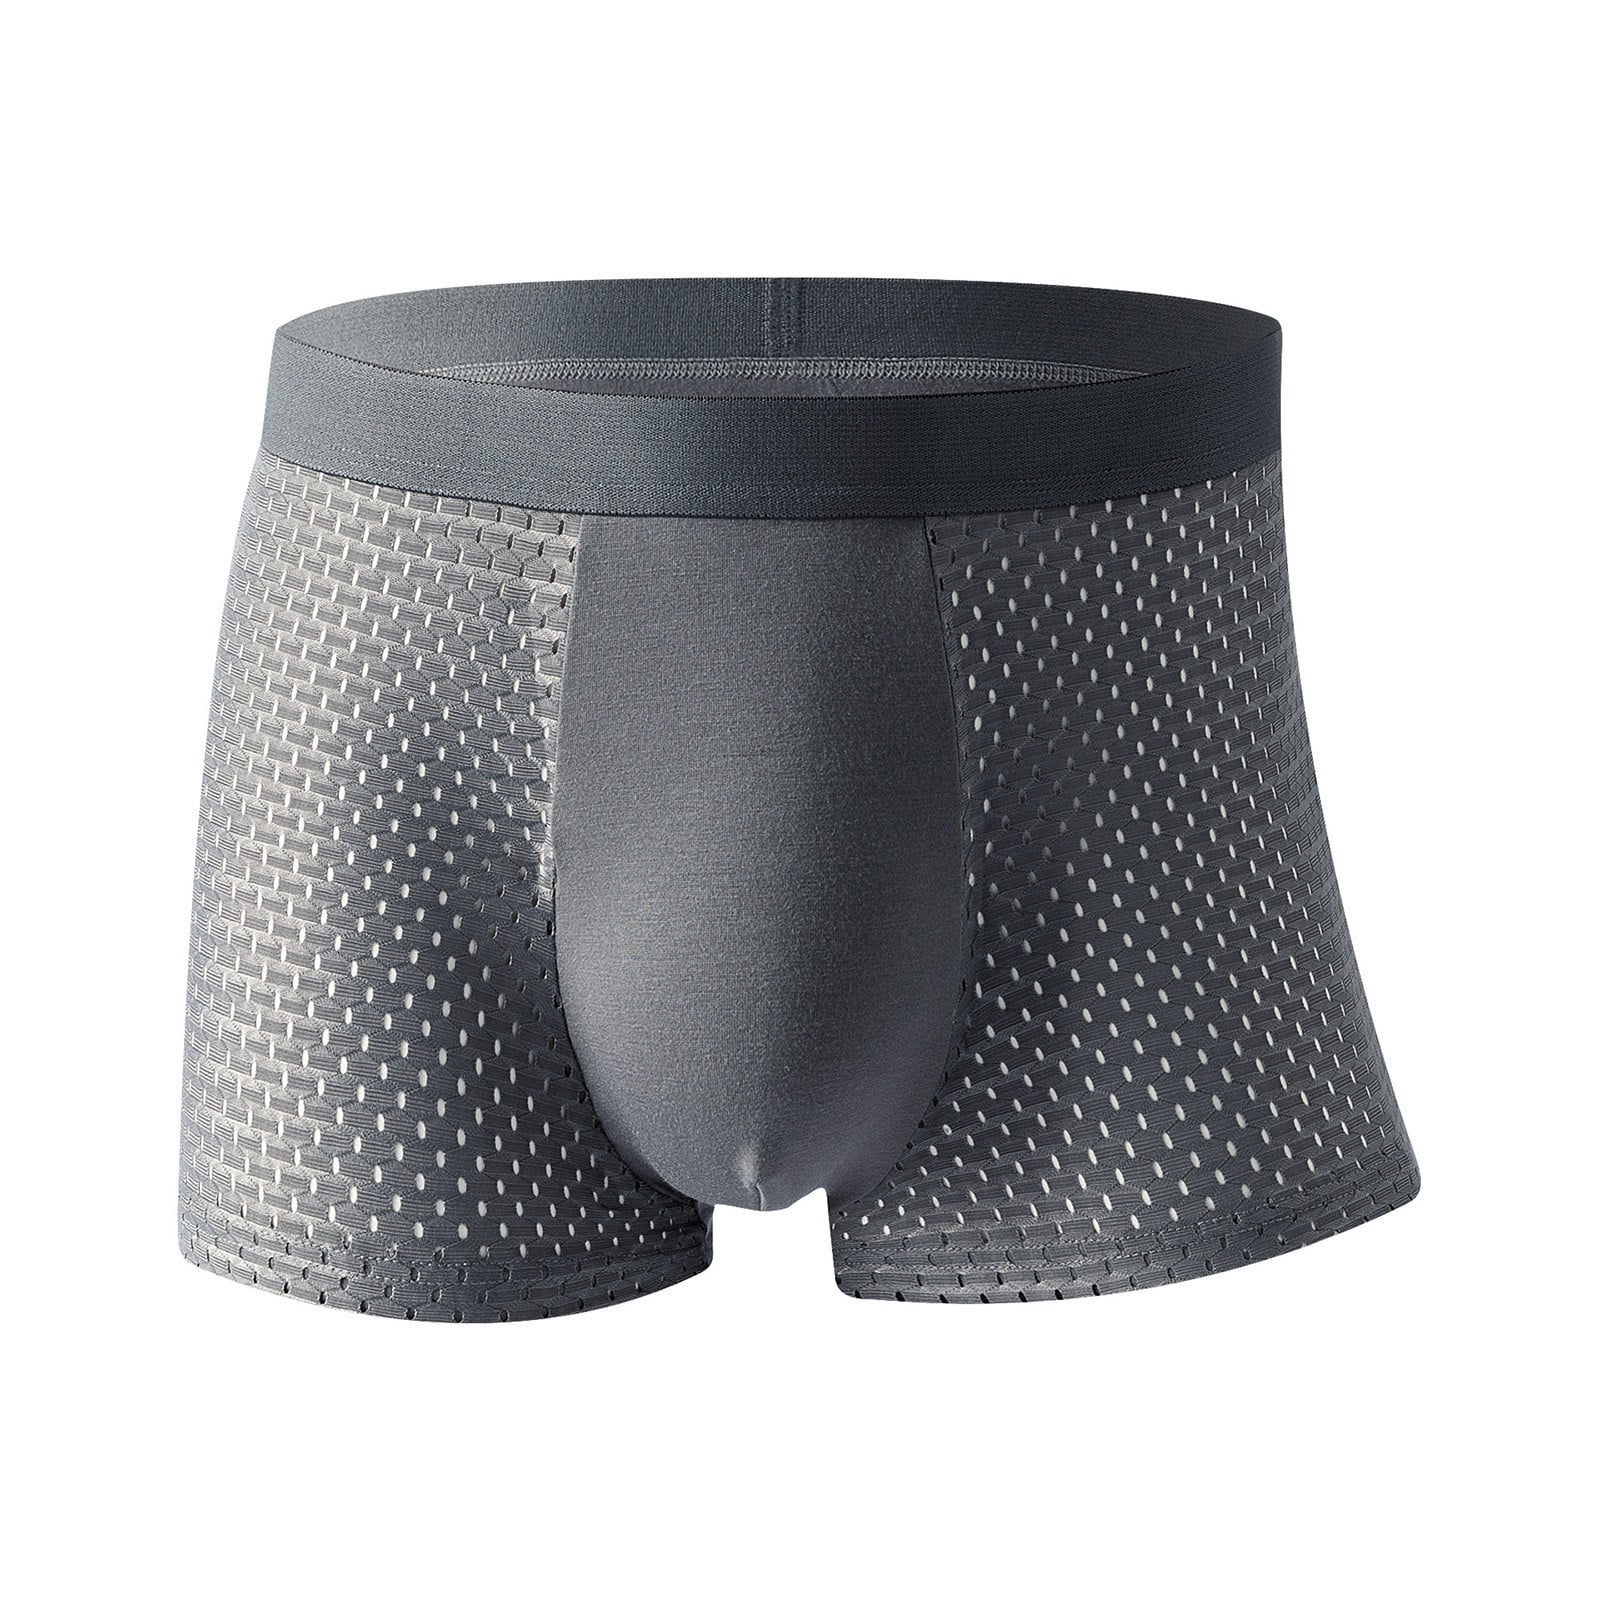  Hammock Support Underwear For Men Long Leg Boxer